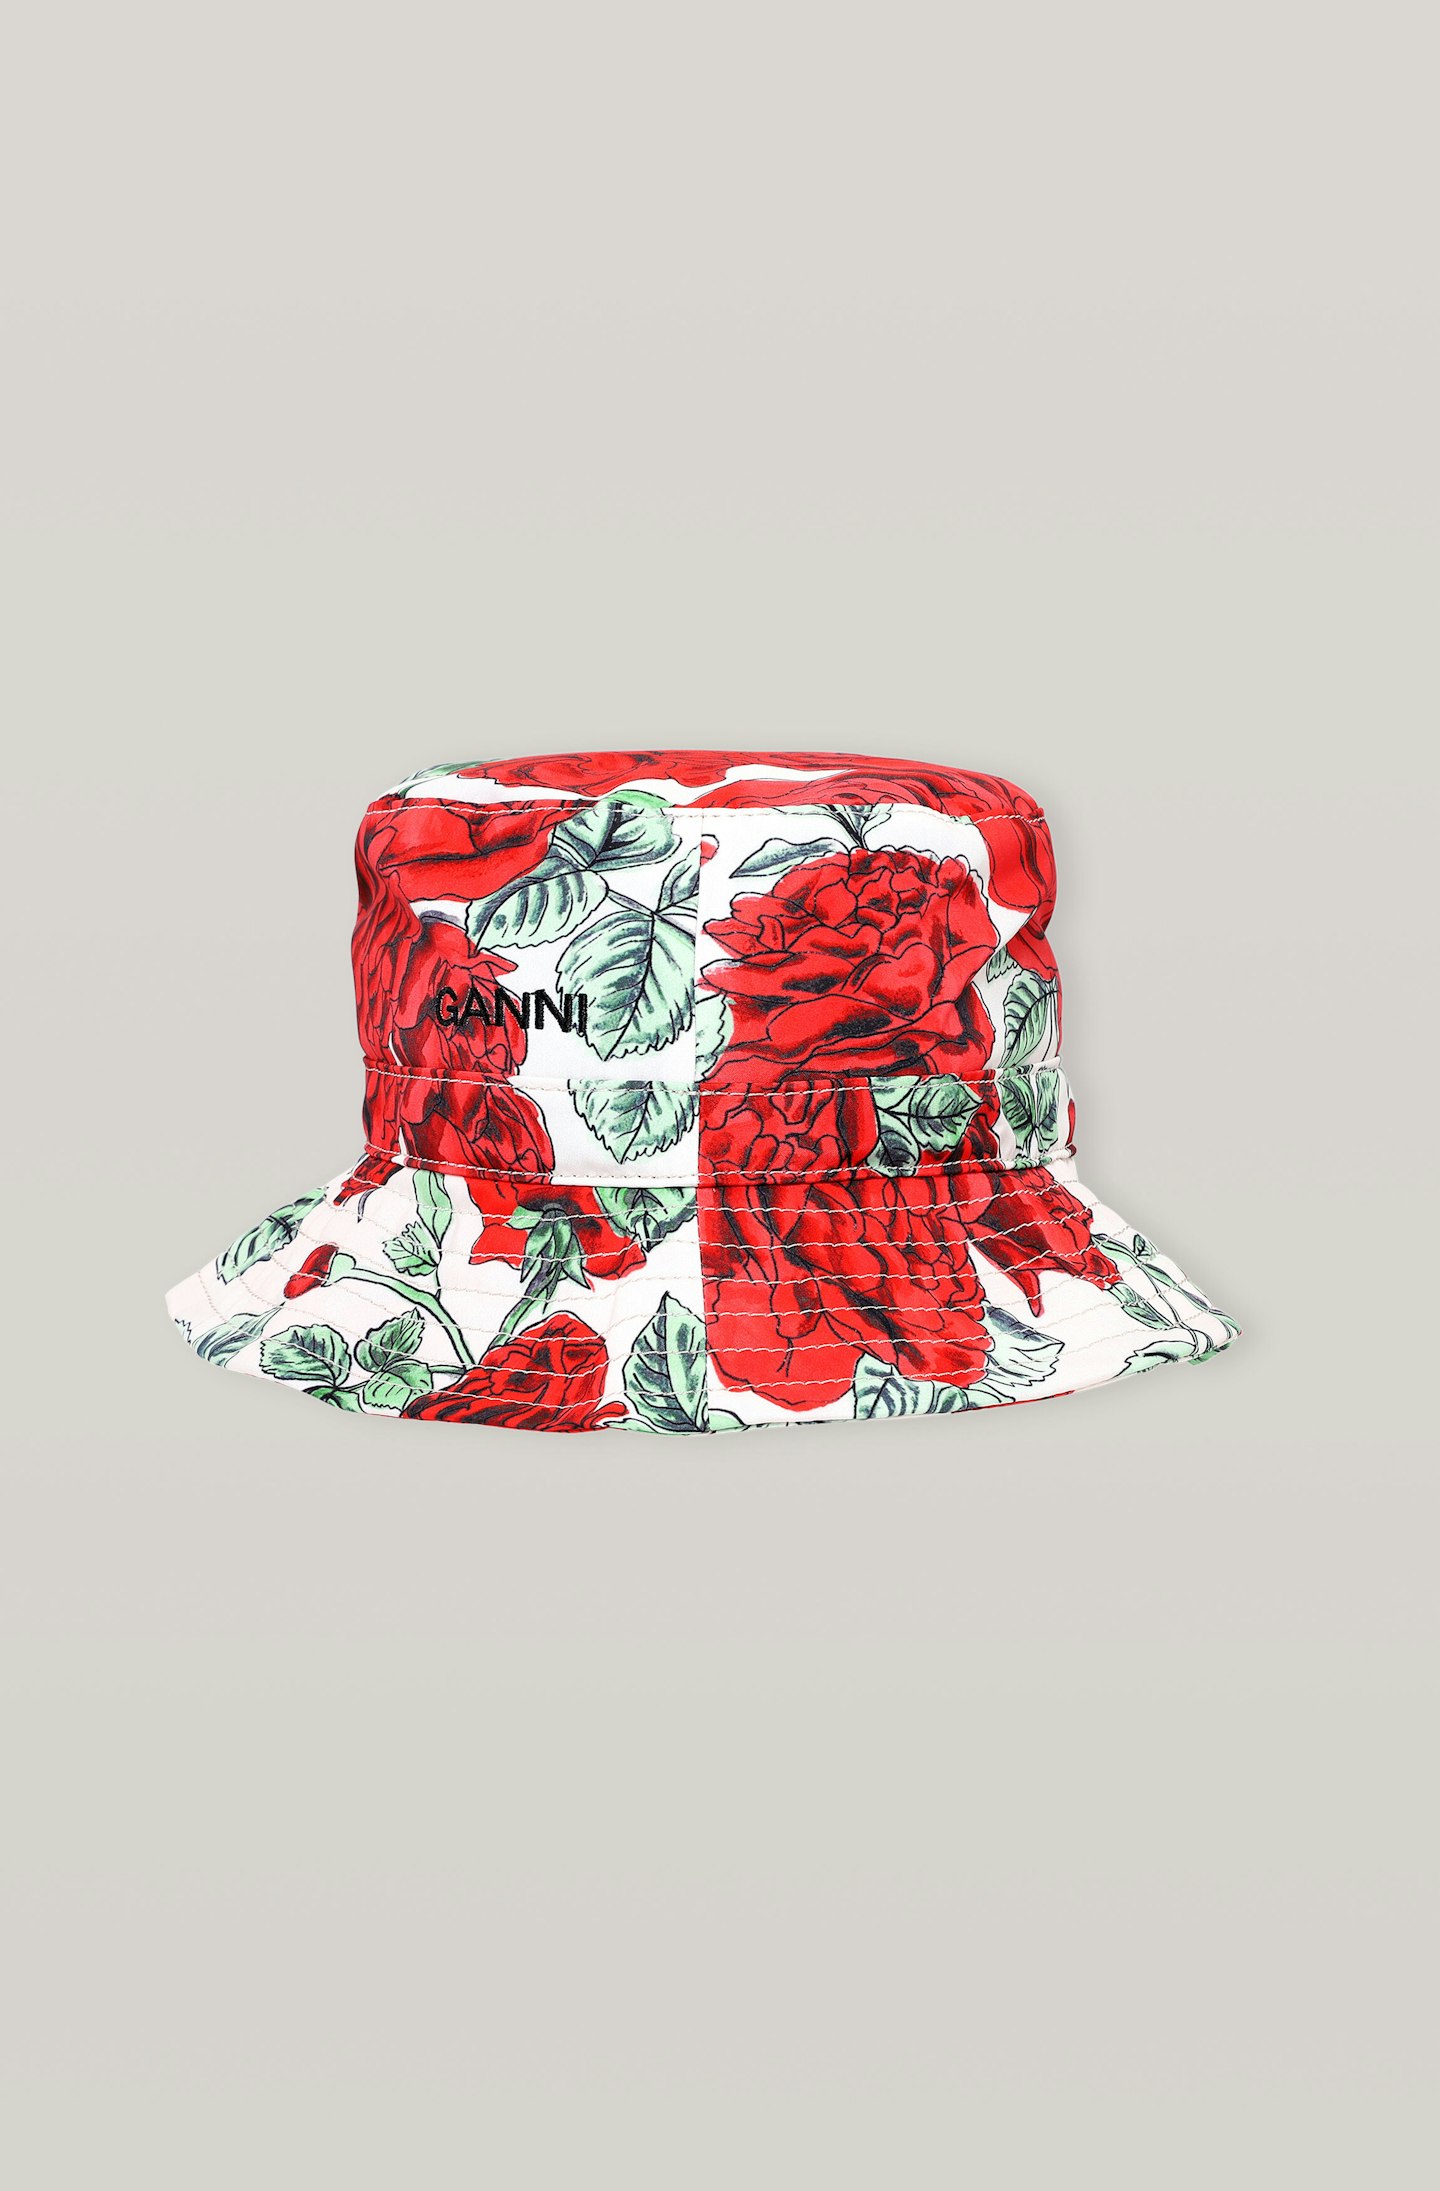 Ganni, Seasonal Recycled Tech Bucket Hat, £75